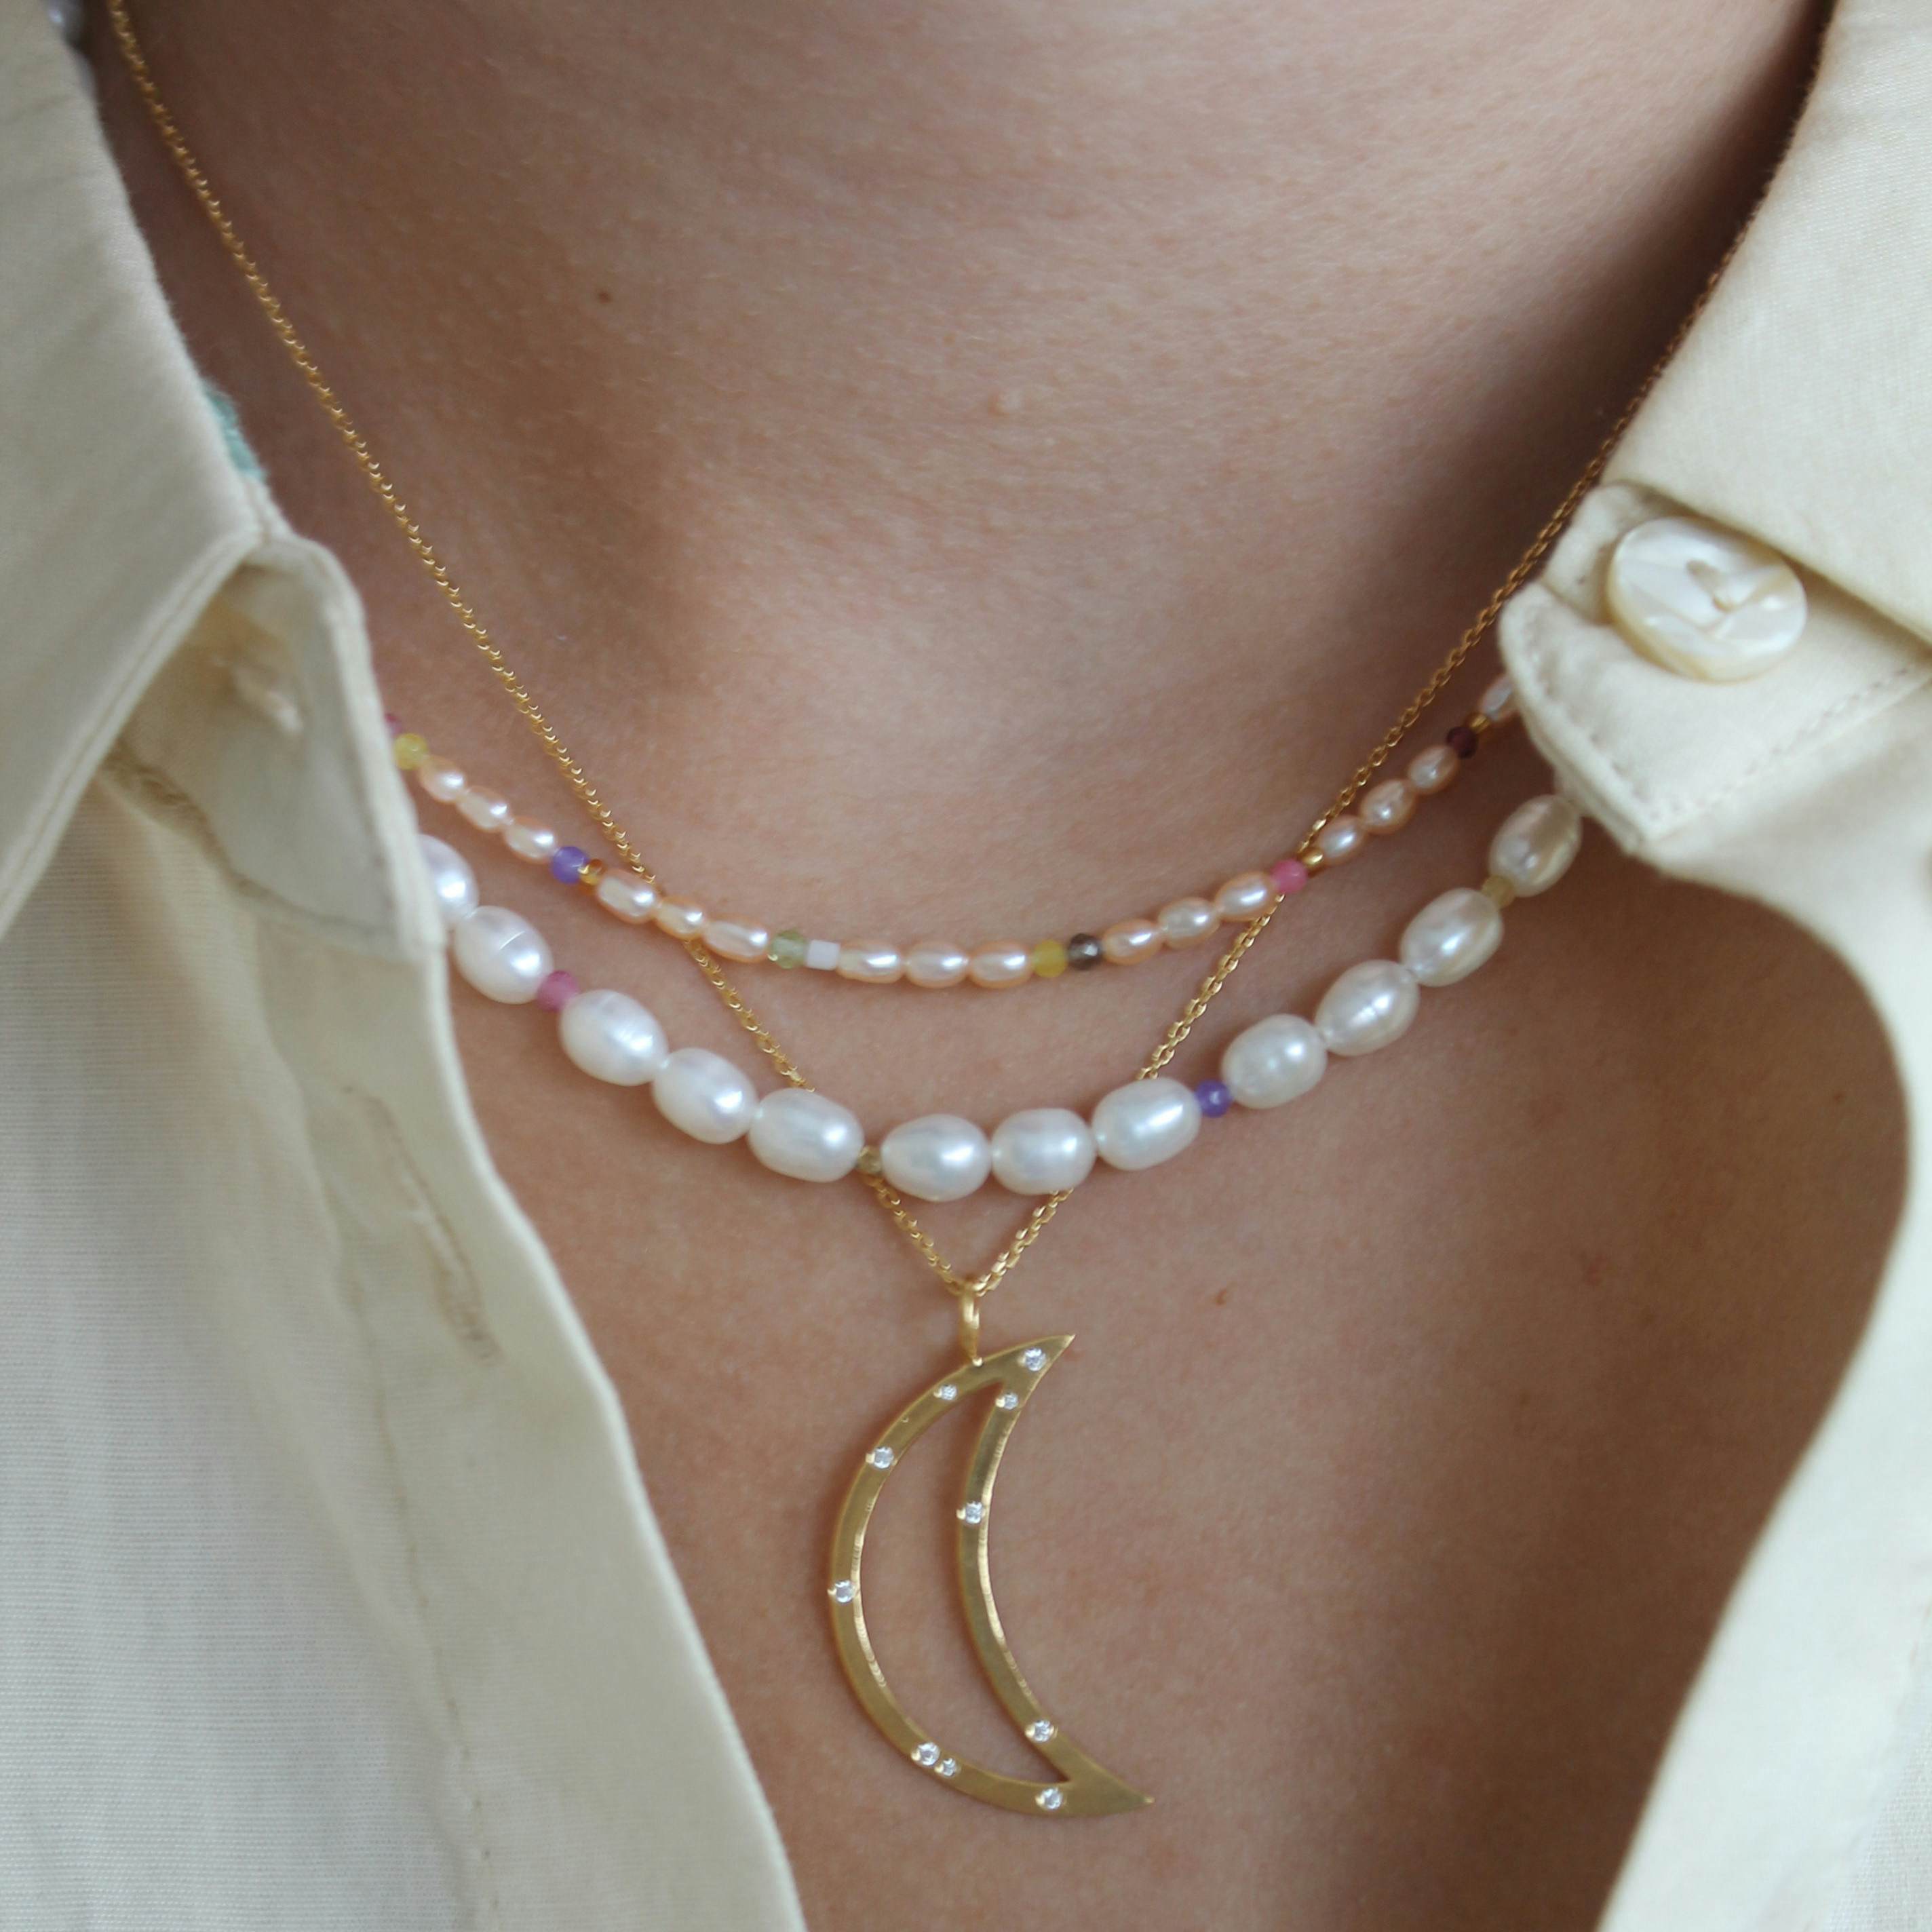 Bella Moon With Stones Pendant von STINE A Jewelry in Vergoldet-Silber Sterling 925